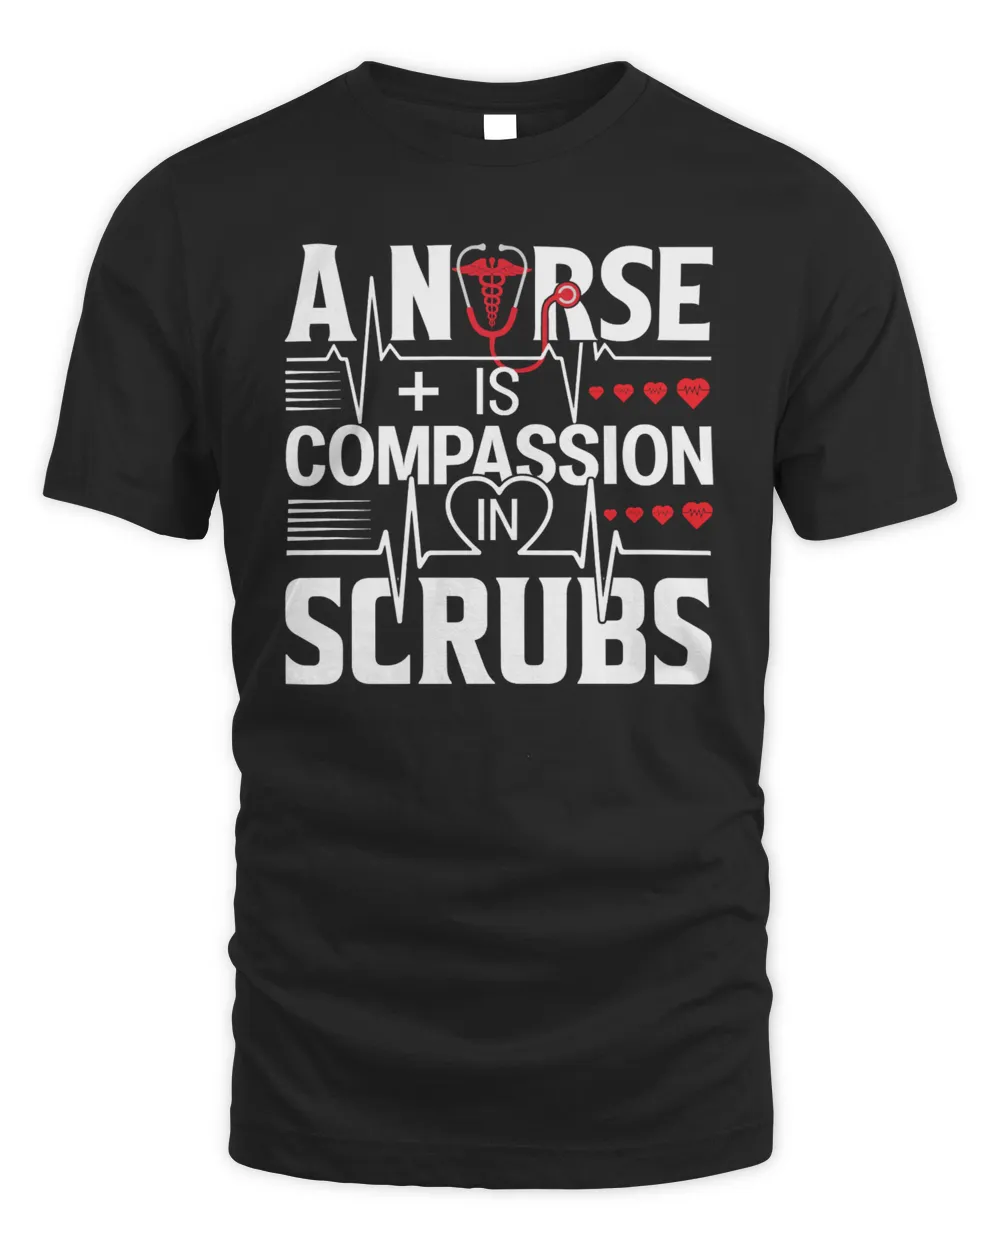 Nurse A Nurse Is Compassion in Scrubs 67 Nursing Hospital